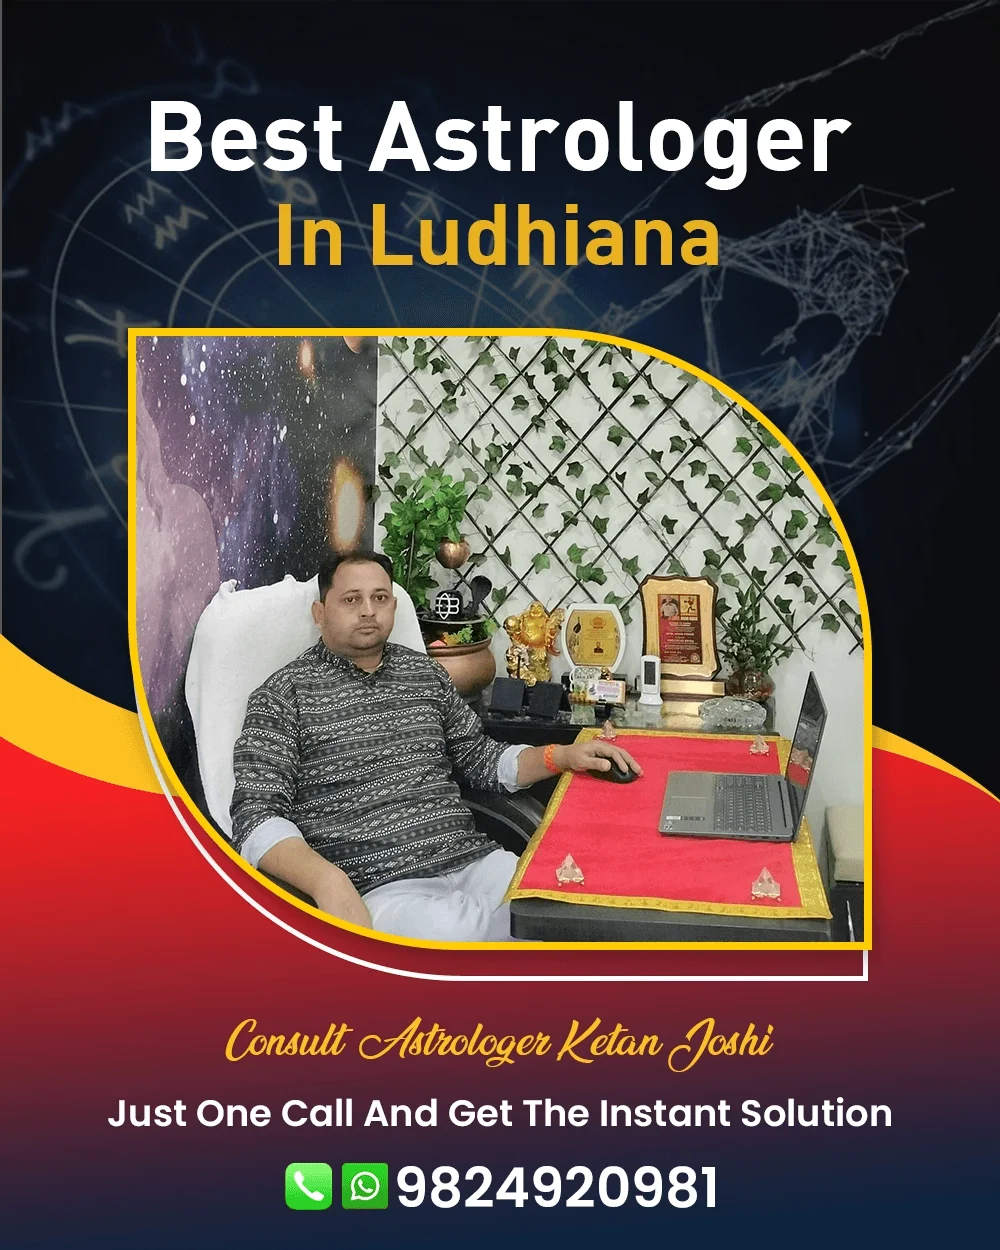 Best Astrologer In Ludhiana